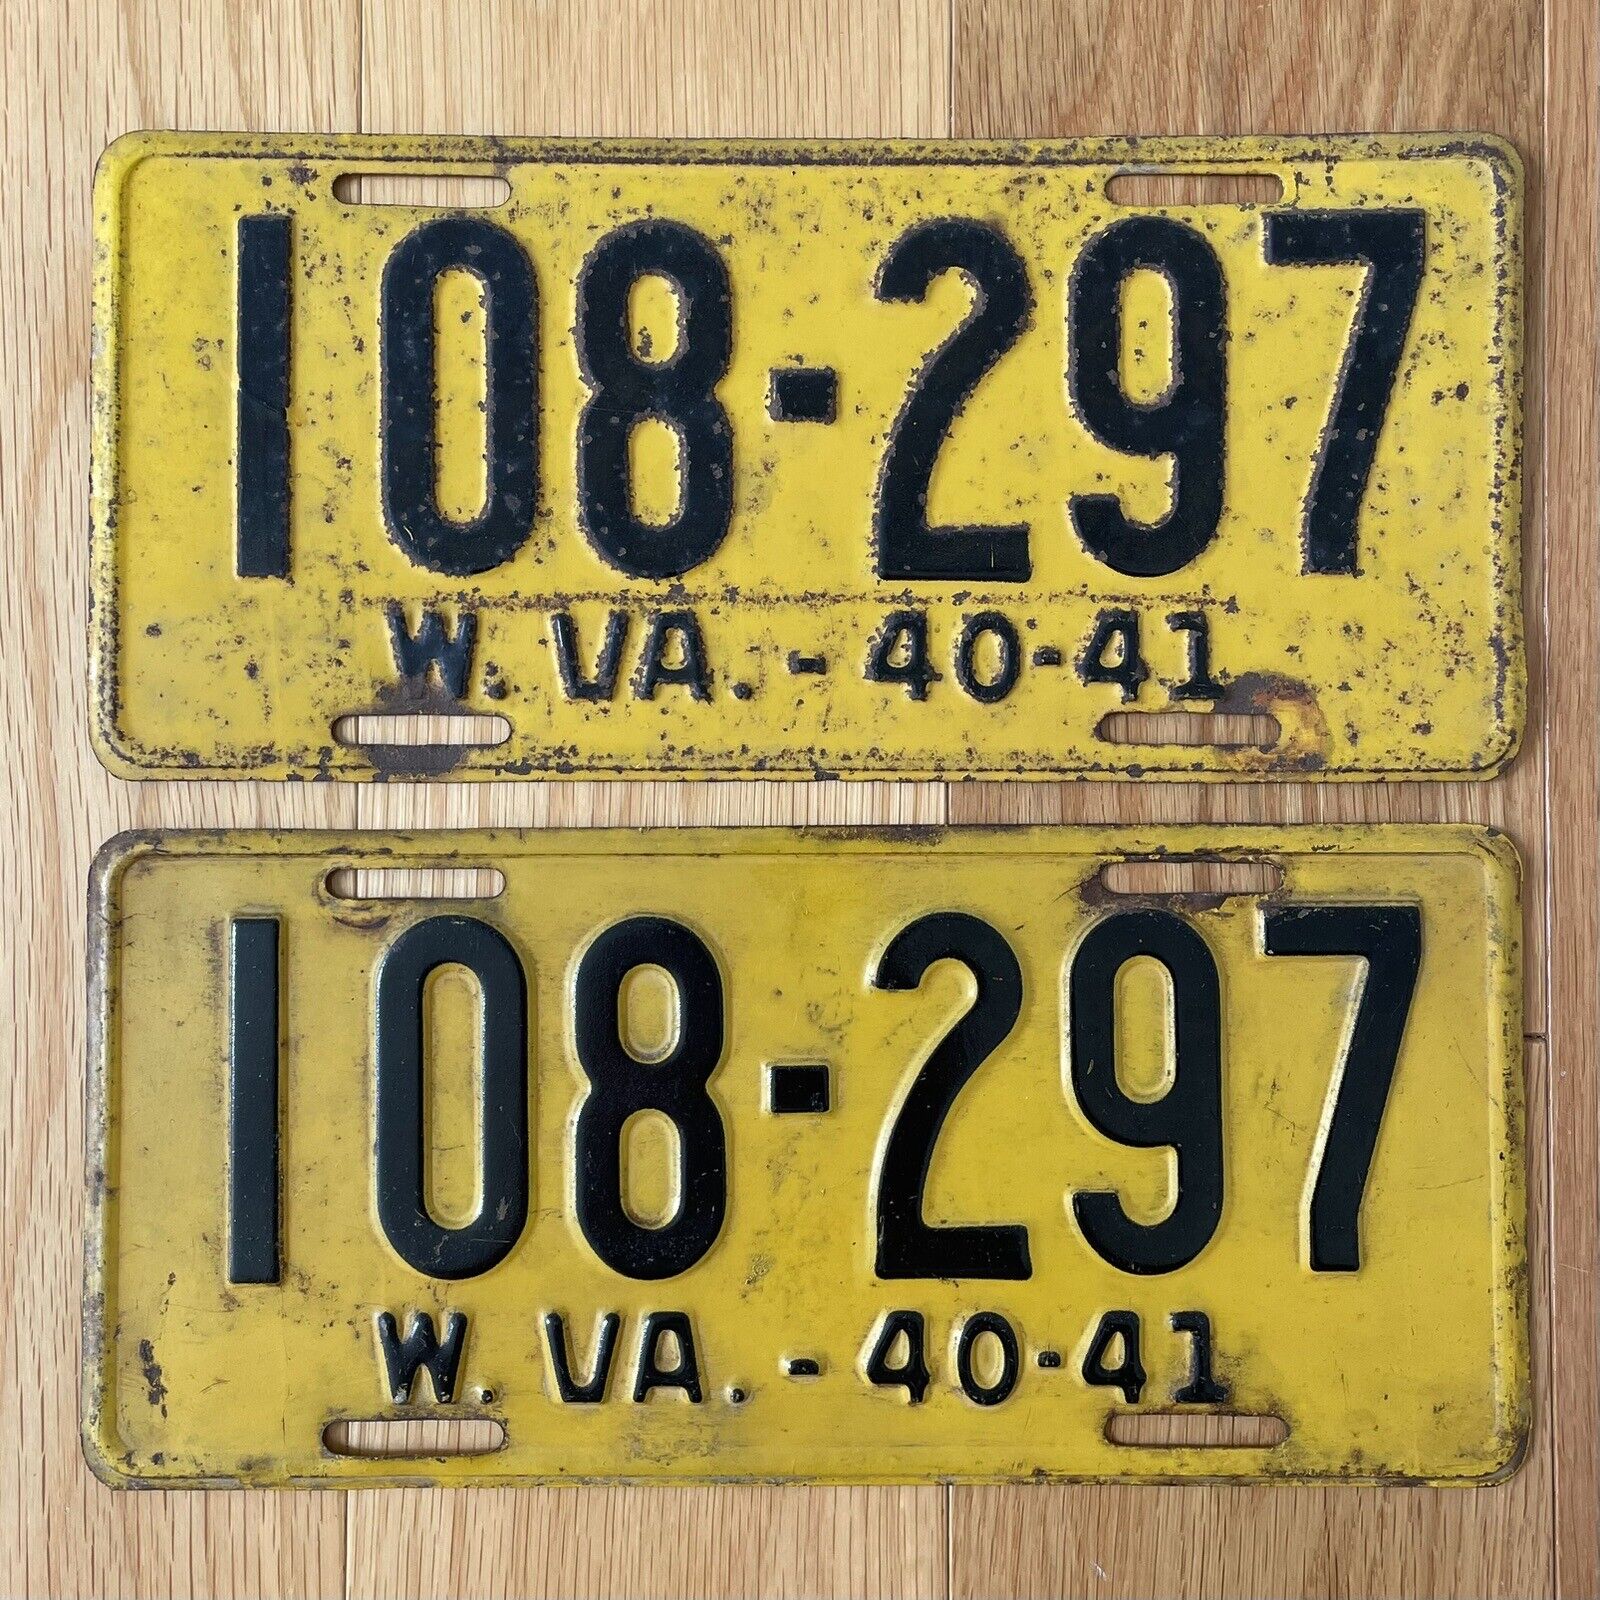 1940-41 West Virginia RARE Double License Plate Tag original.